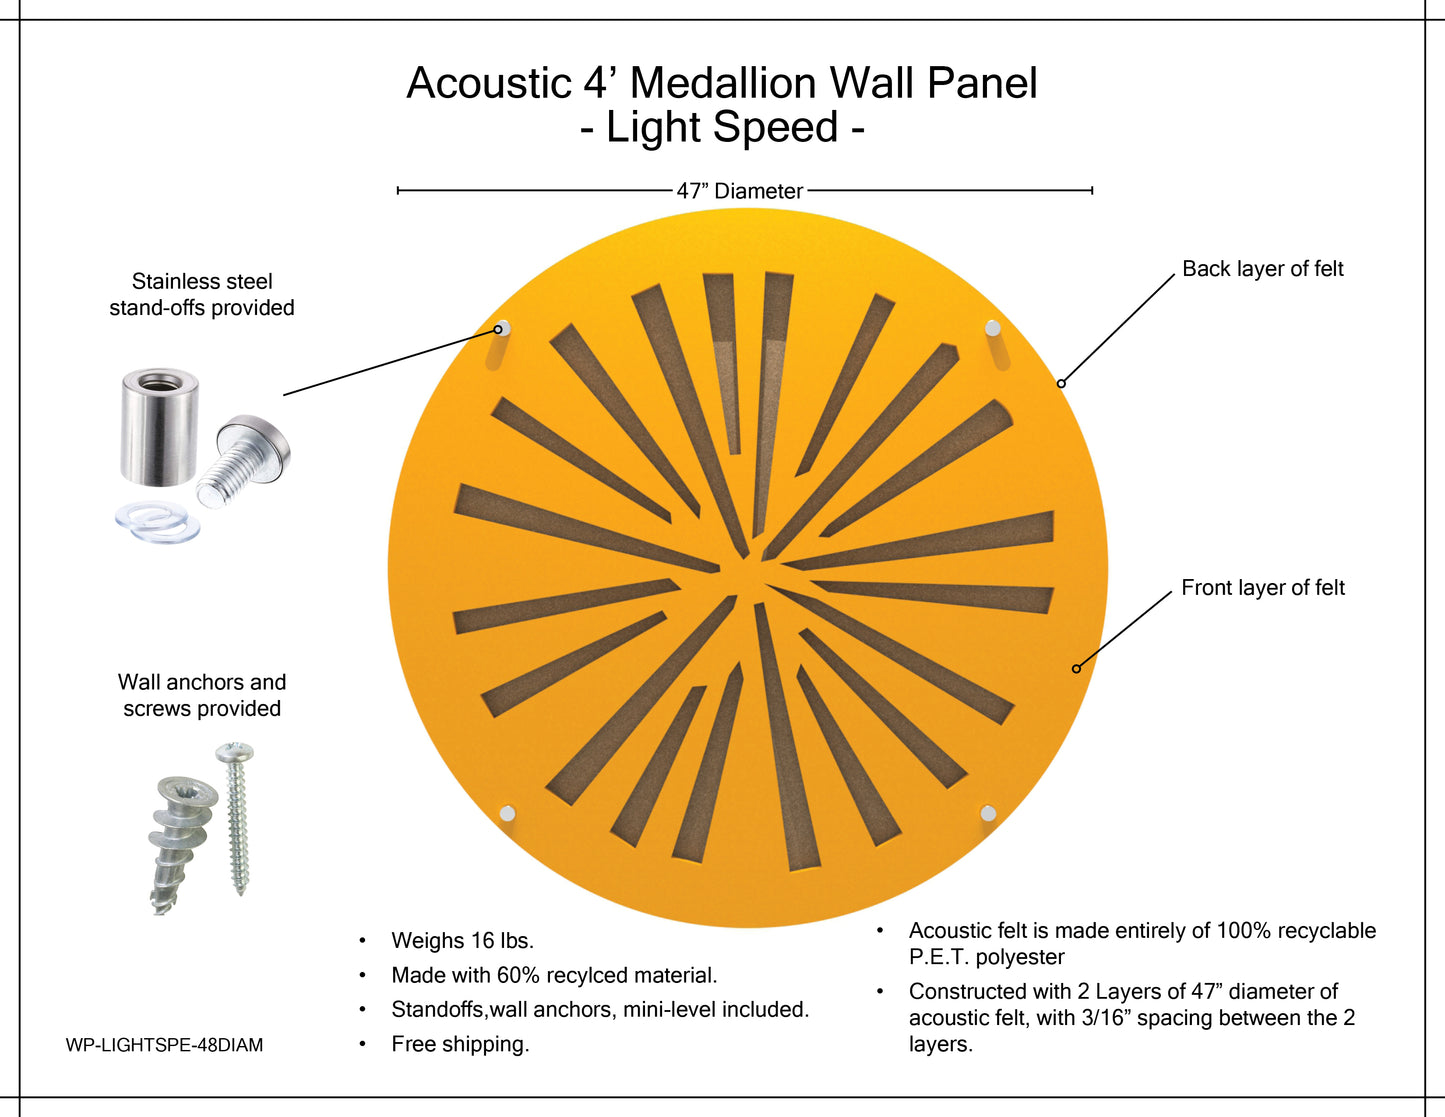 Medallion Acoustic Wall Panel - Light Speed